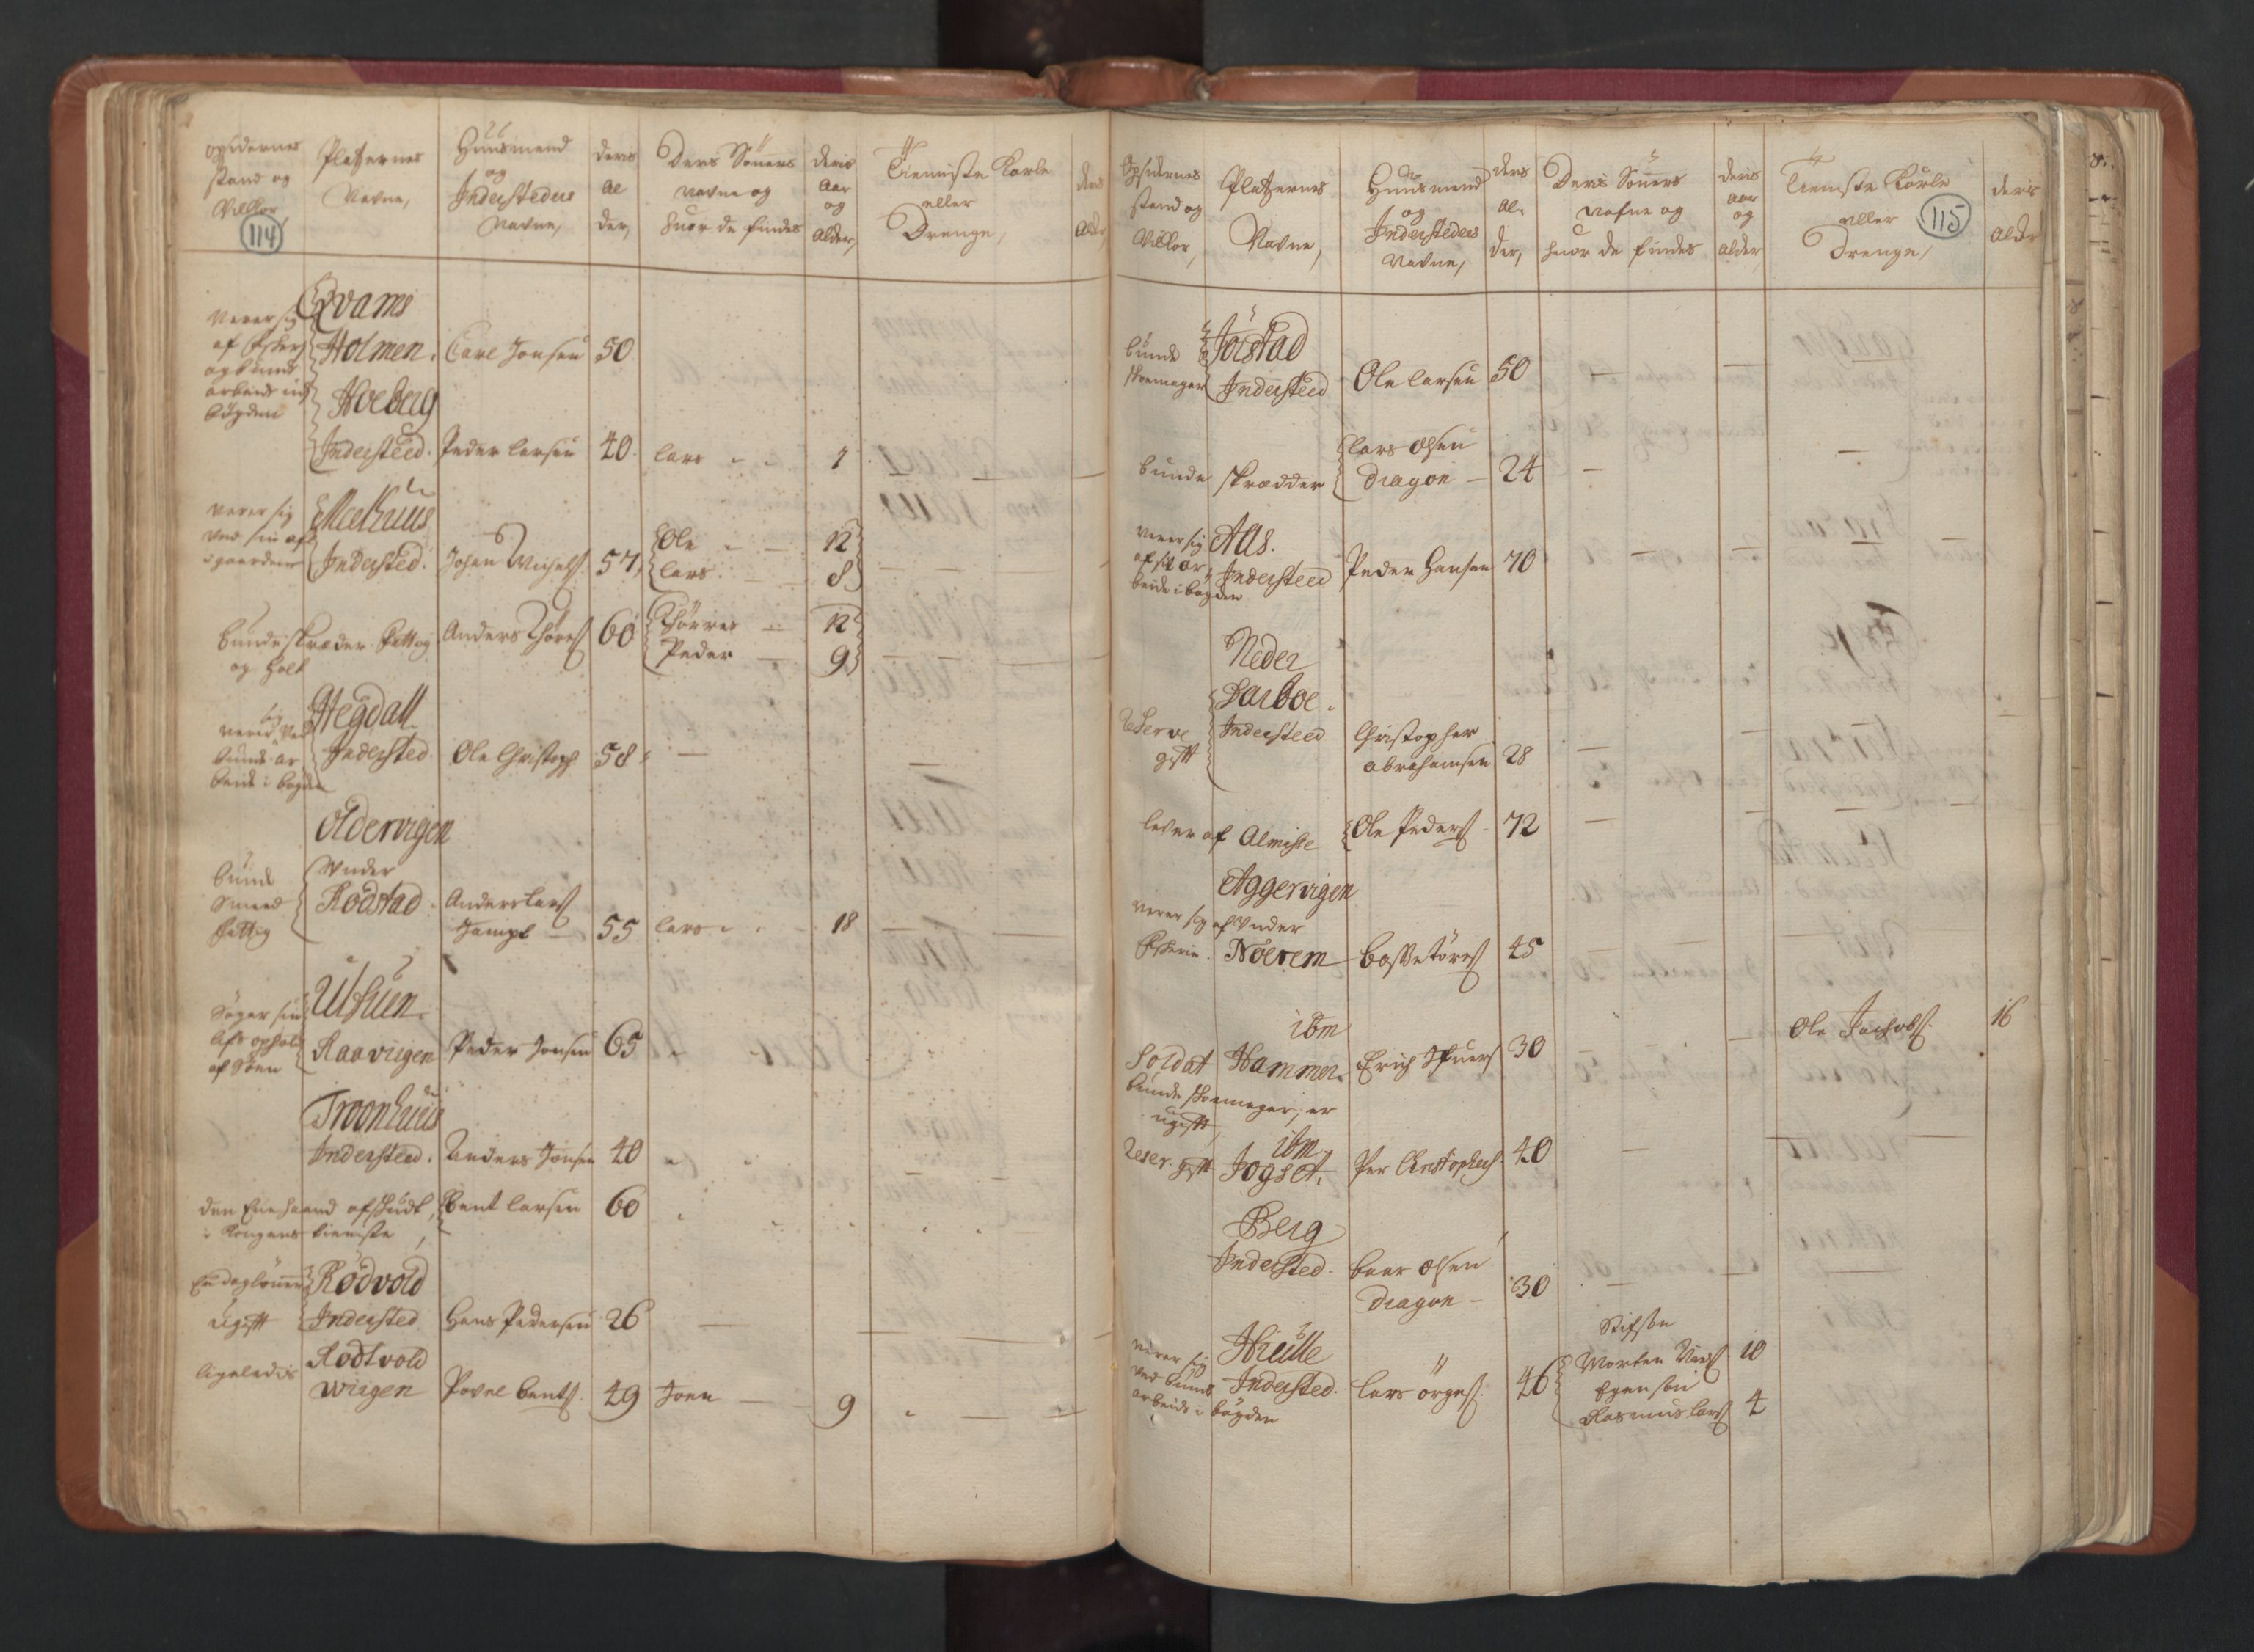 RA, Census (manntall) 1701, no. 15: Inderøy fogderi and Namdal fogderi, 1701, p. 114-115